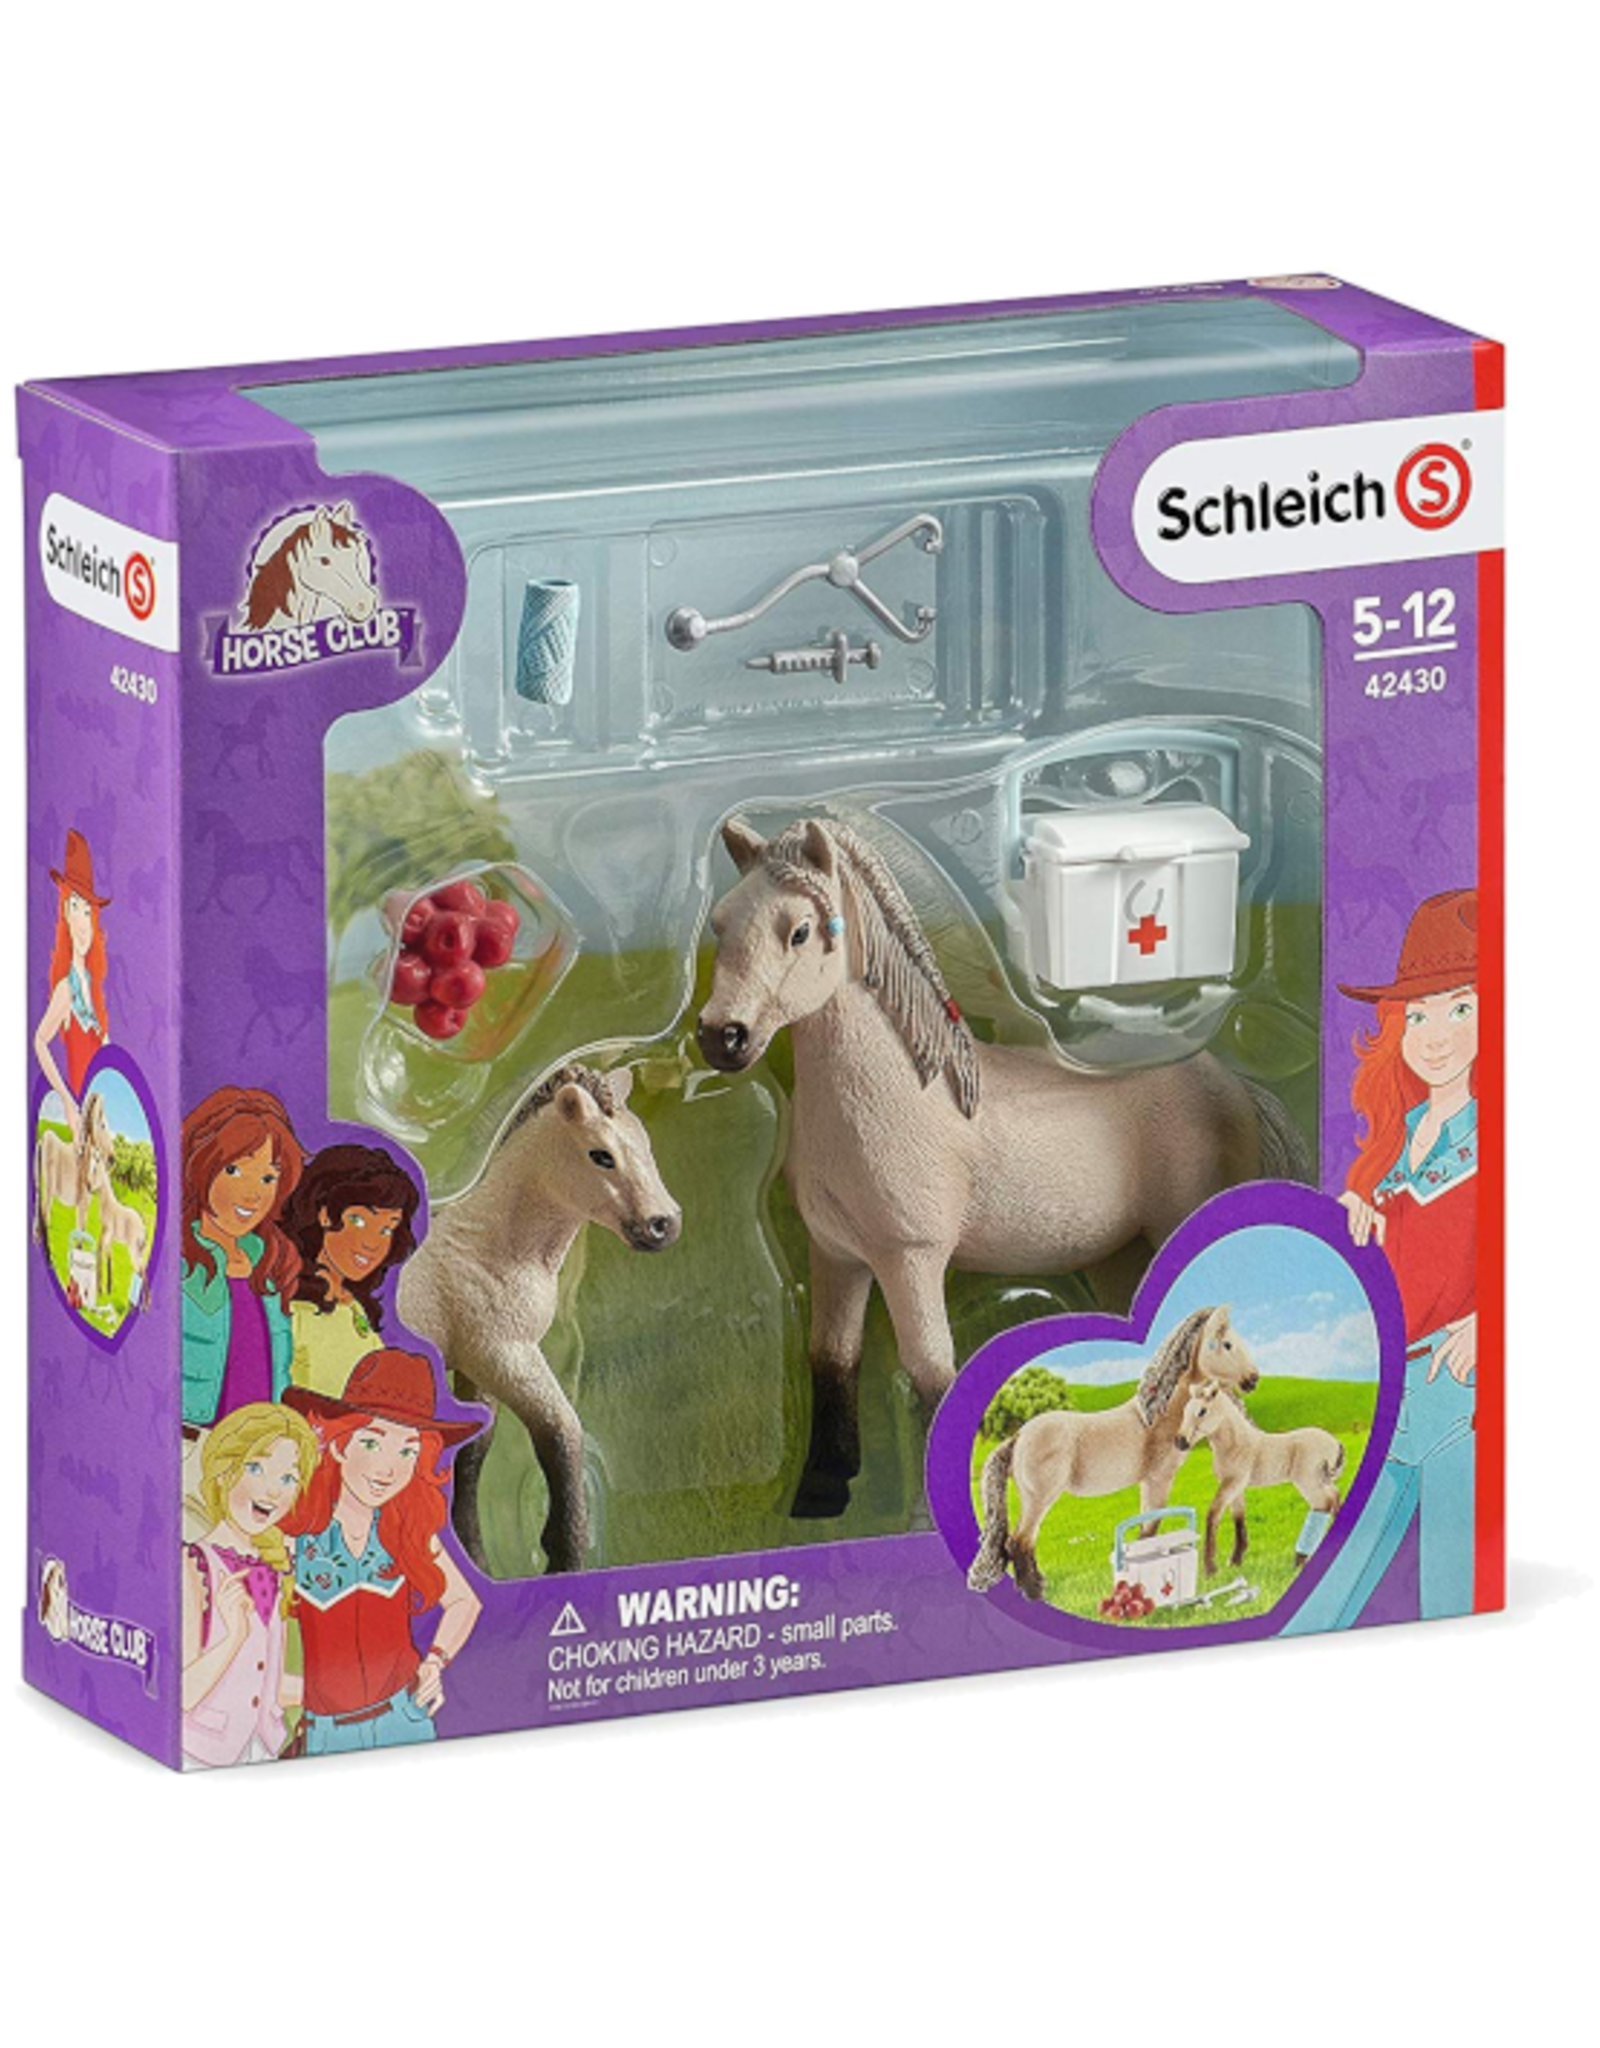 Schleich Schleich - Horse Club - 42430 - Hannah’s first-aid kit